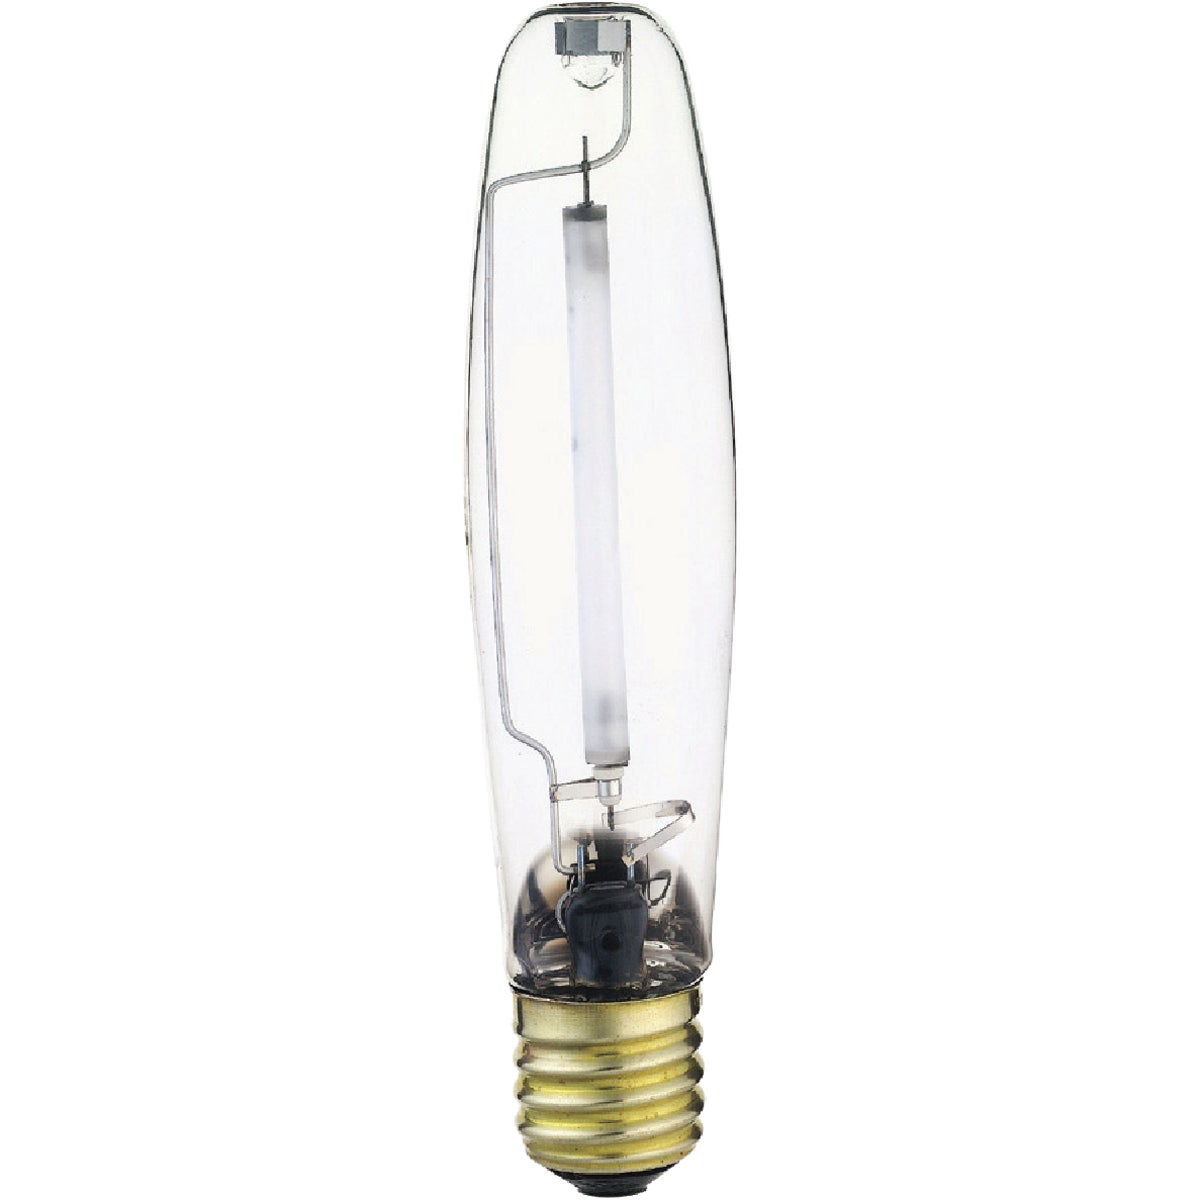 Satco 250W Clear ET18 Mogul Screw High-Pressure Sodium High-Intensity Light Bulb